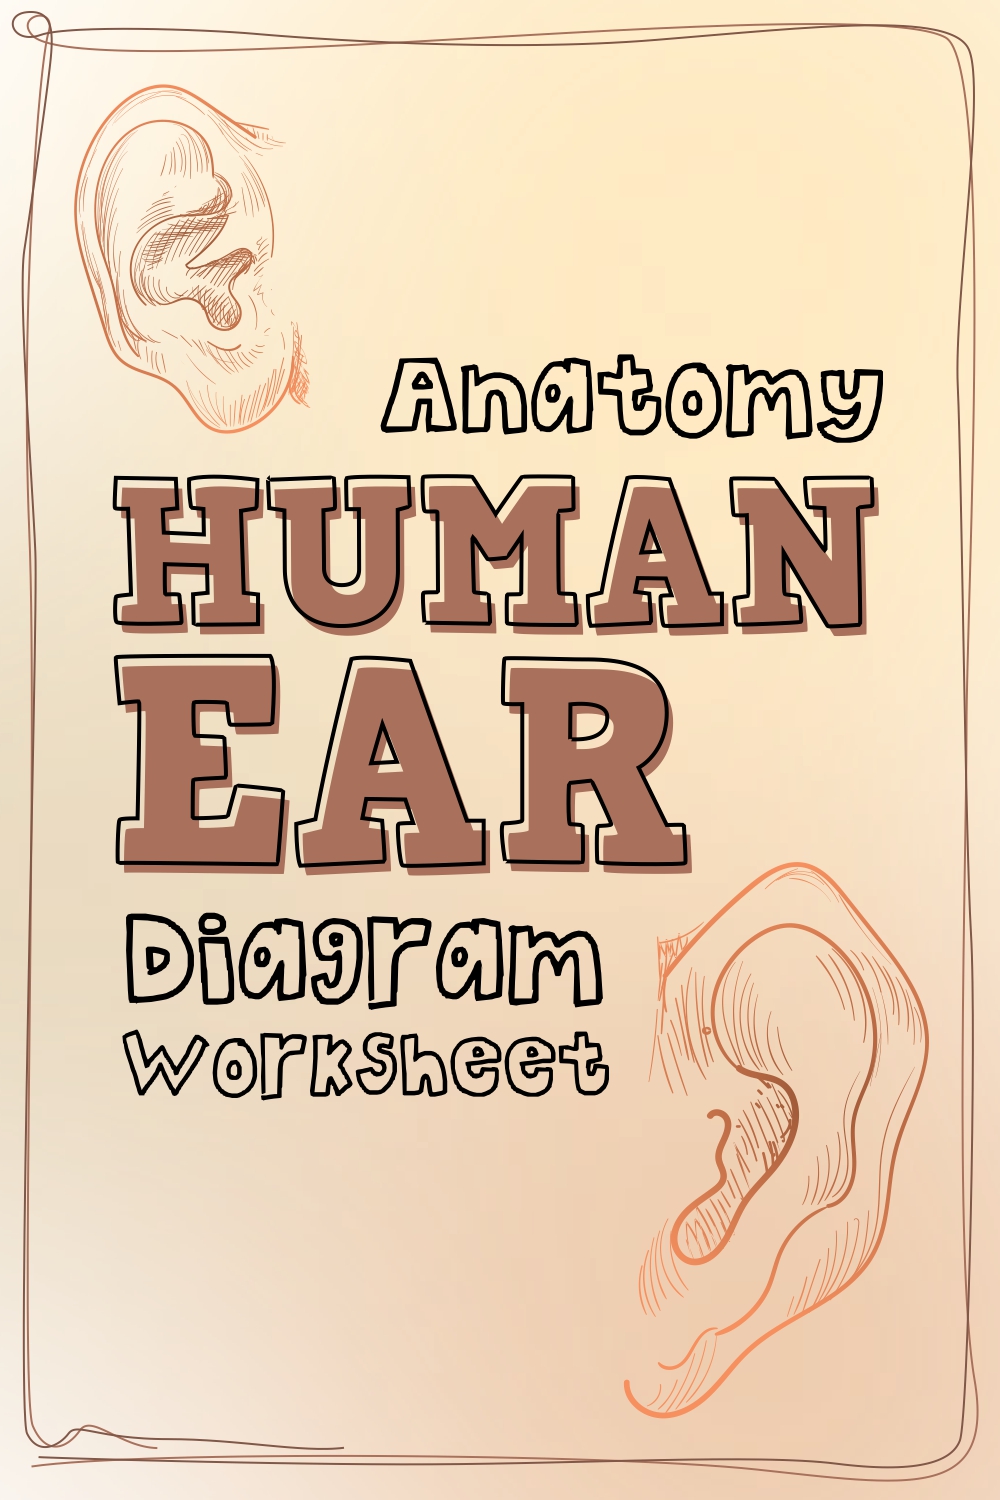 12 Images of Anatomy Human Ear Diagram Worksheet